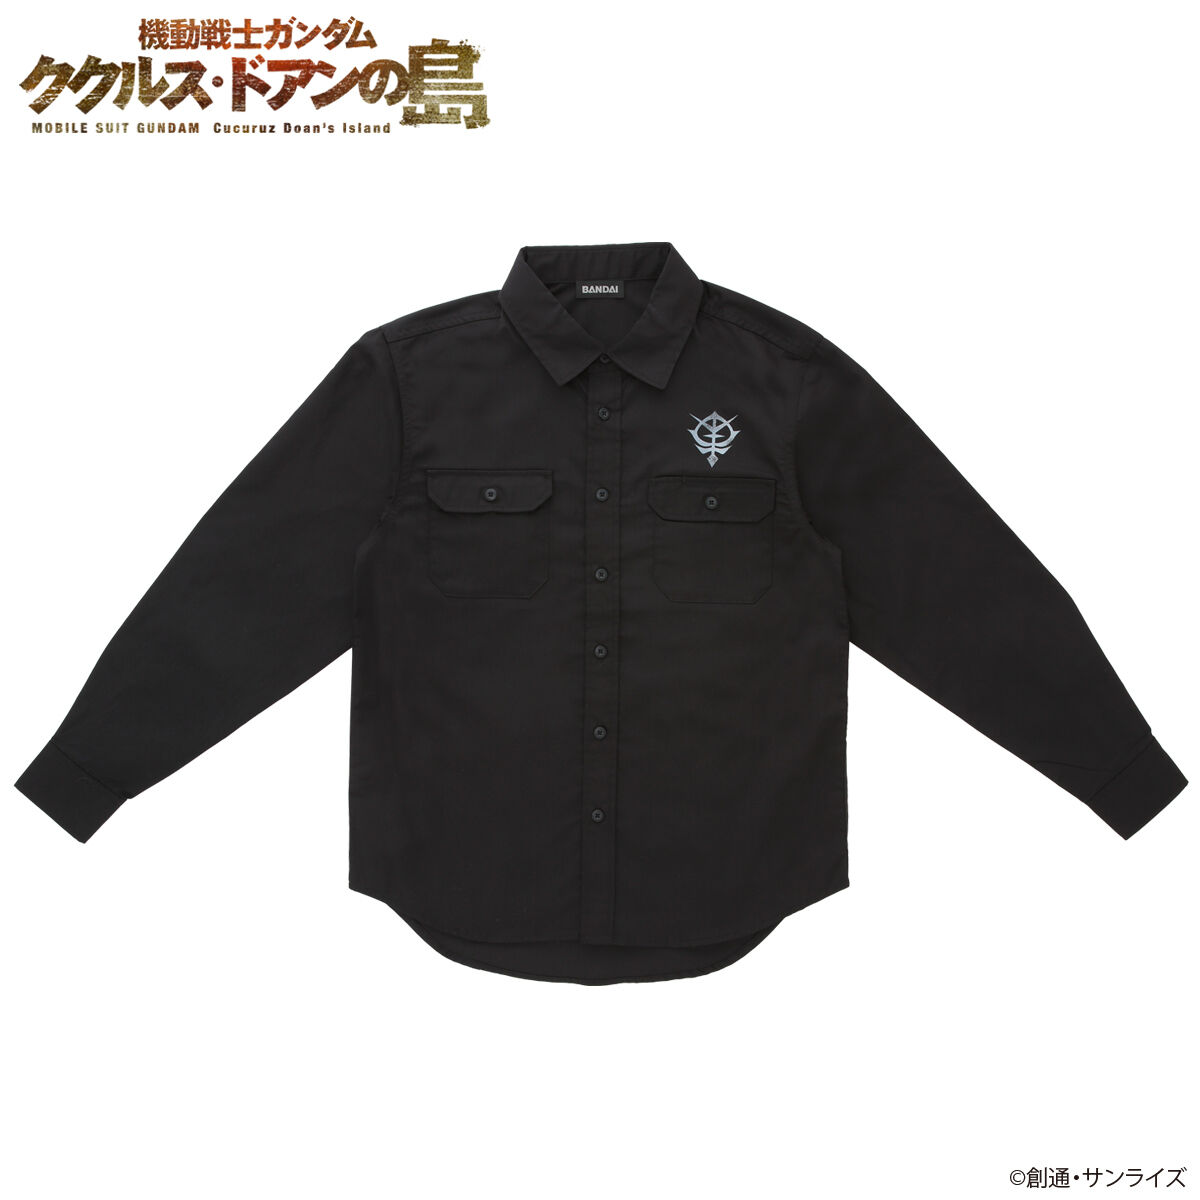 Mobile Suit Gundam Cucuruz: Doan's Island BLACK Series Southern Cross Corps Work Shirt